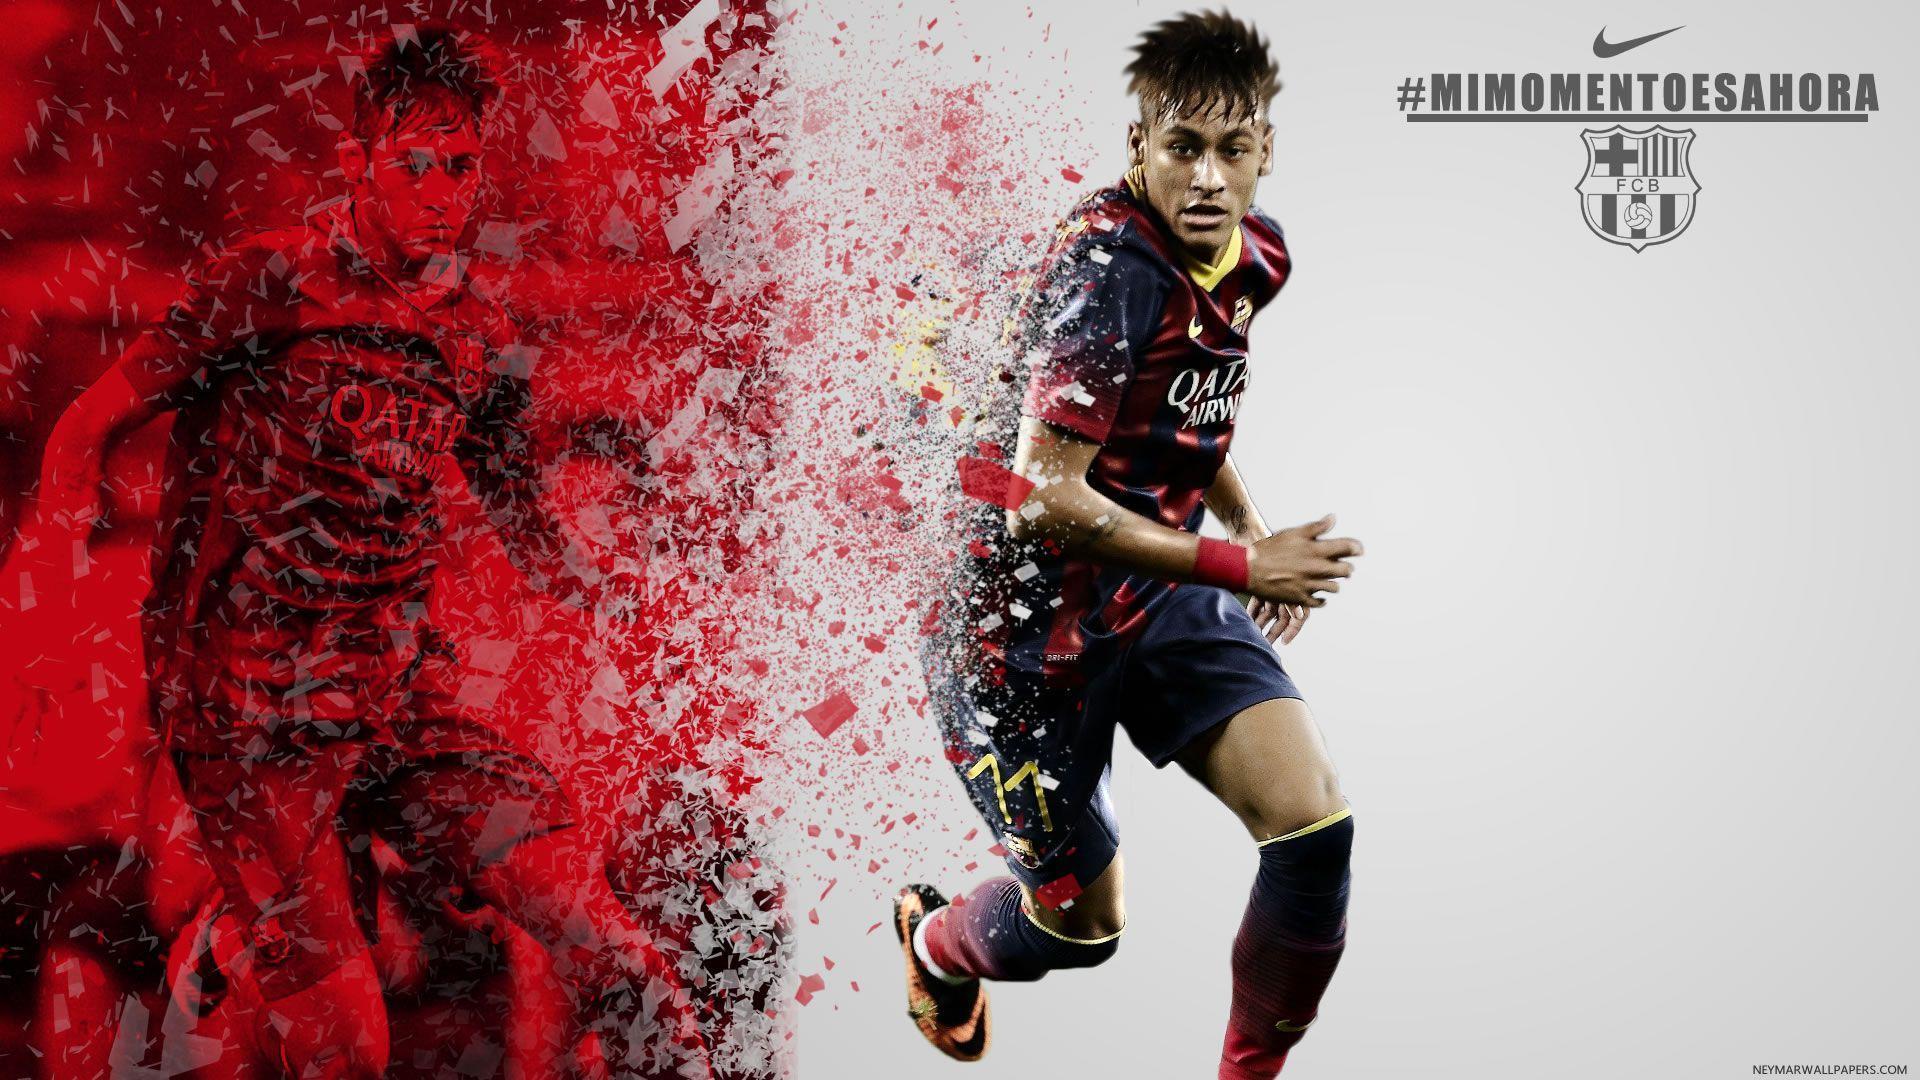 Neymar HD Wallpaper 1080p